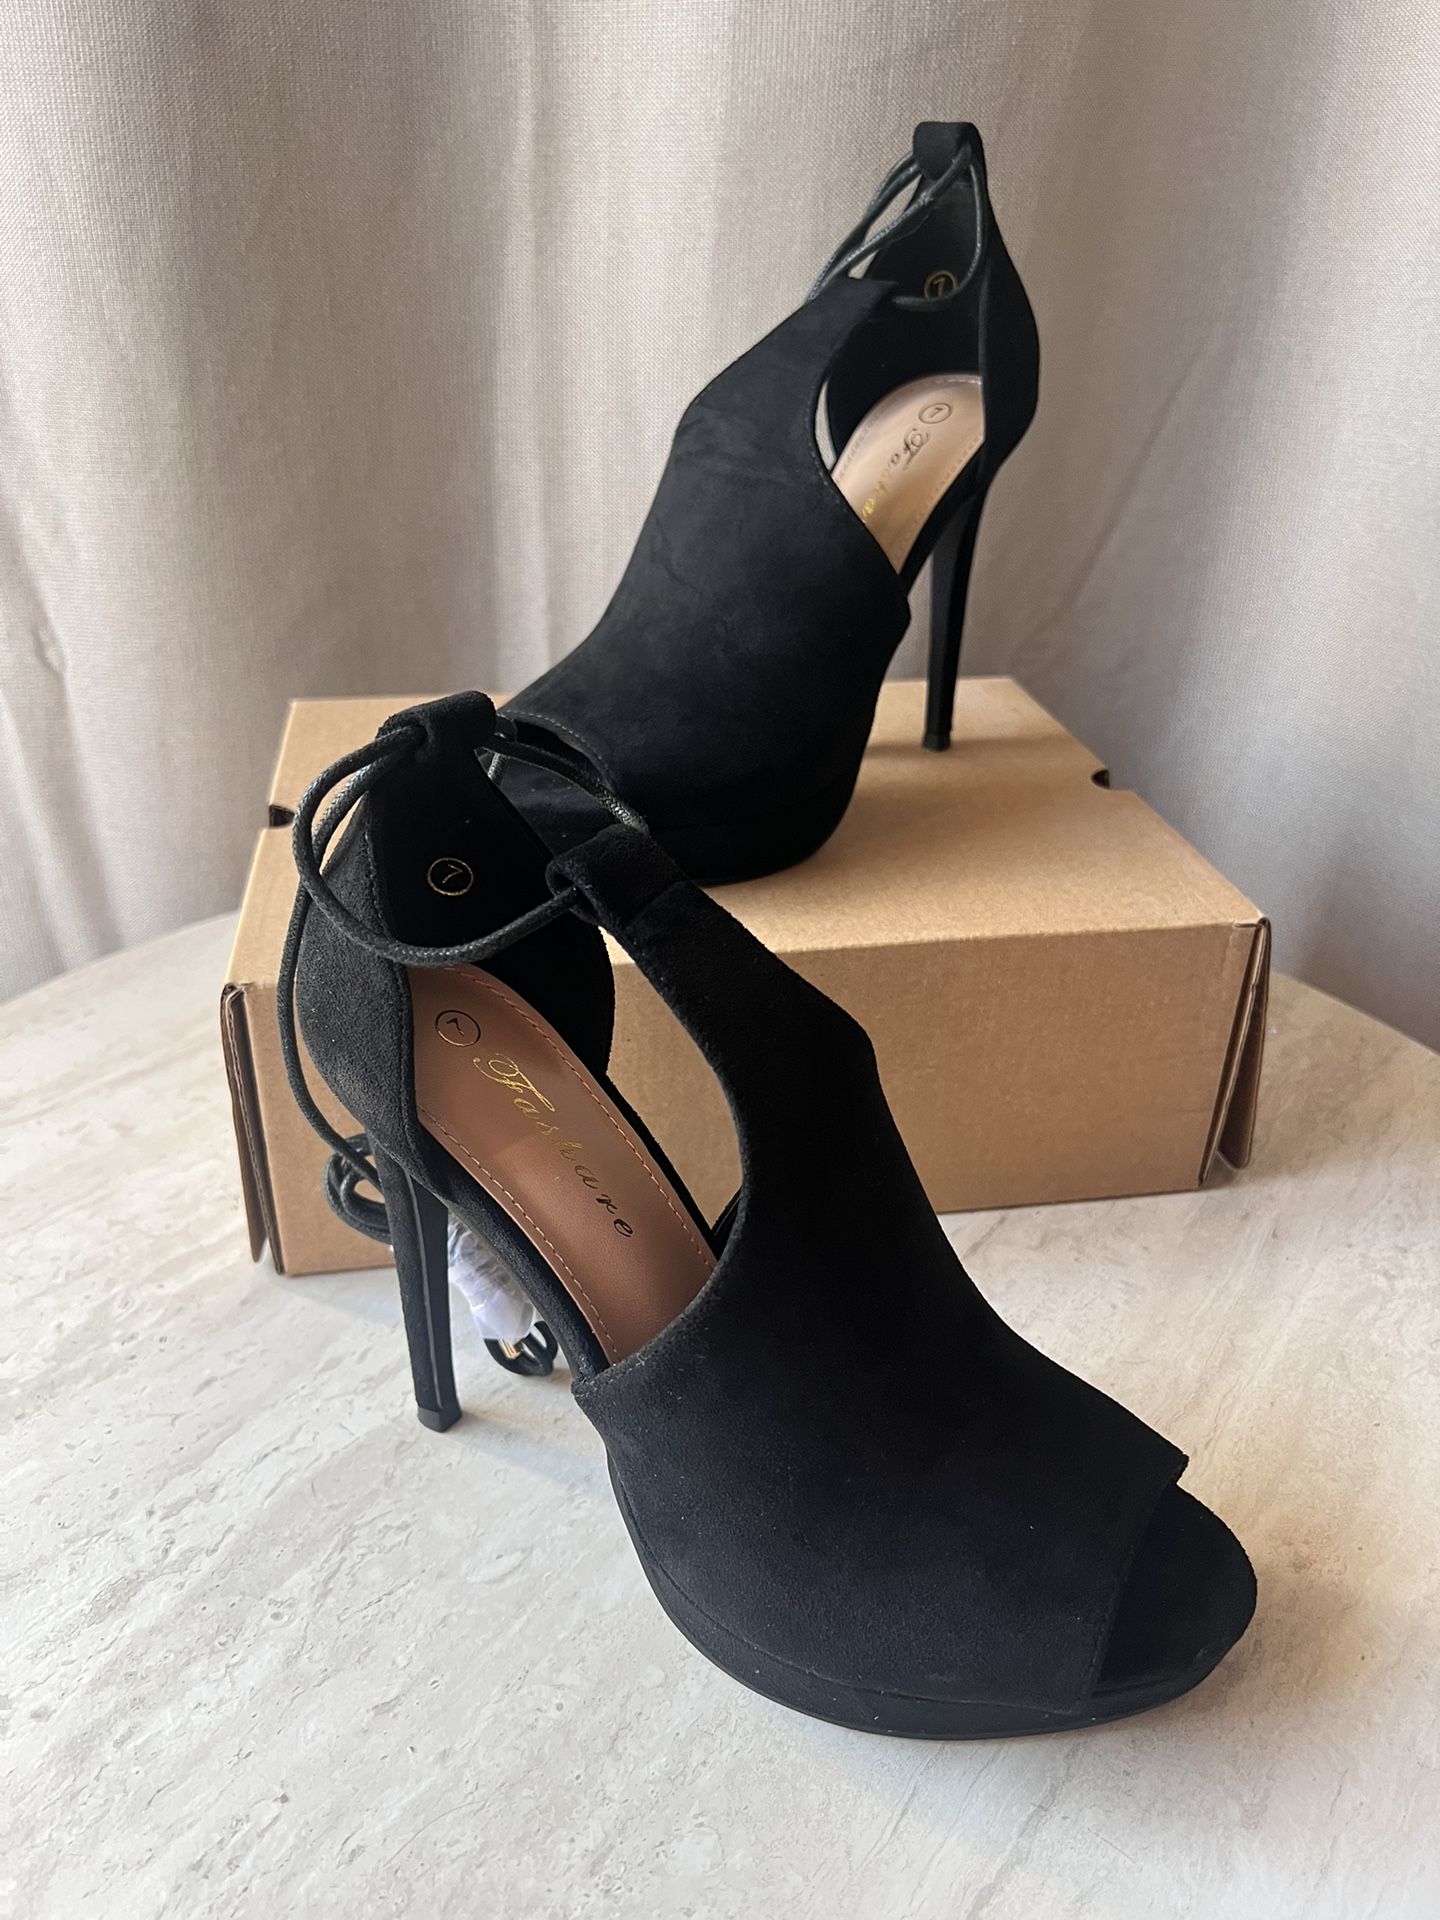 Black Heels Brand New In Box 